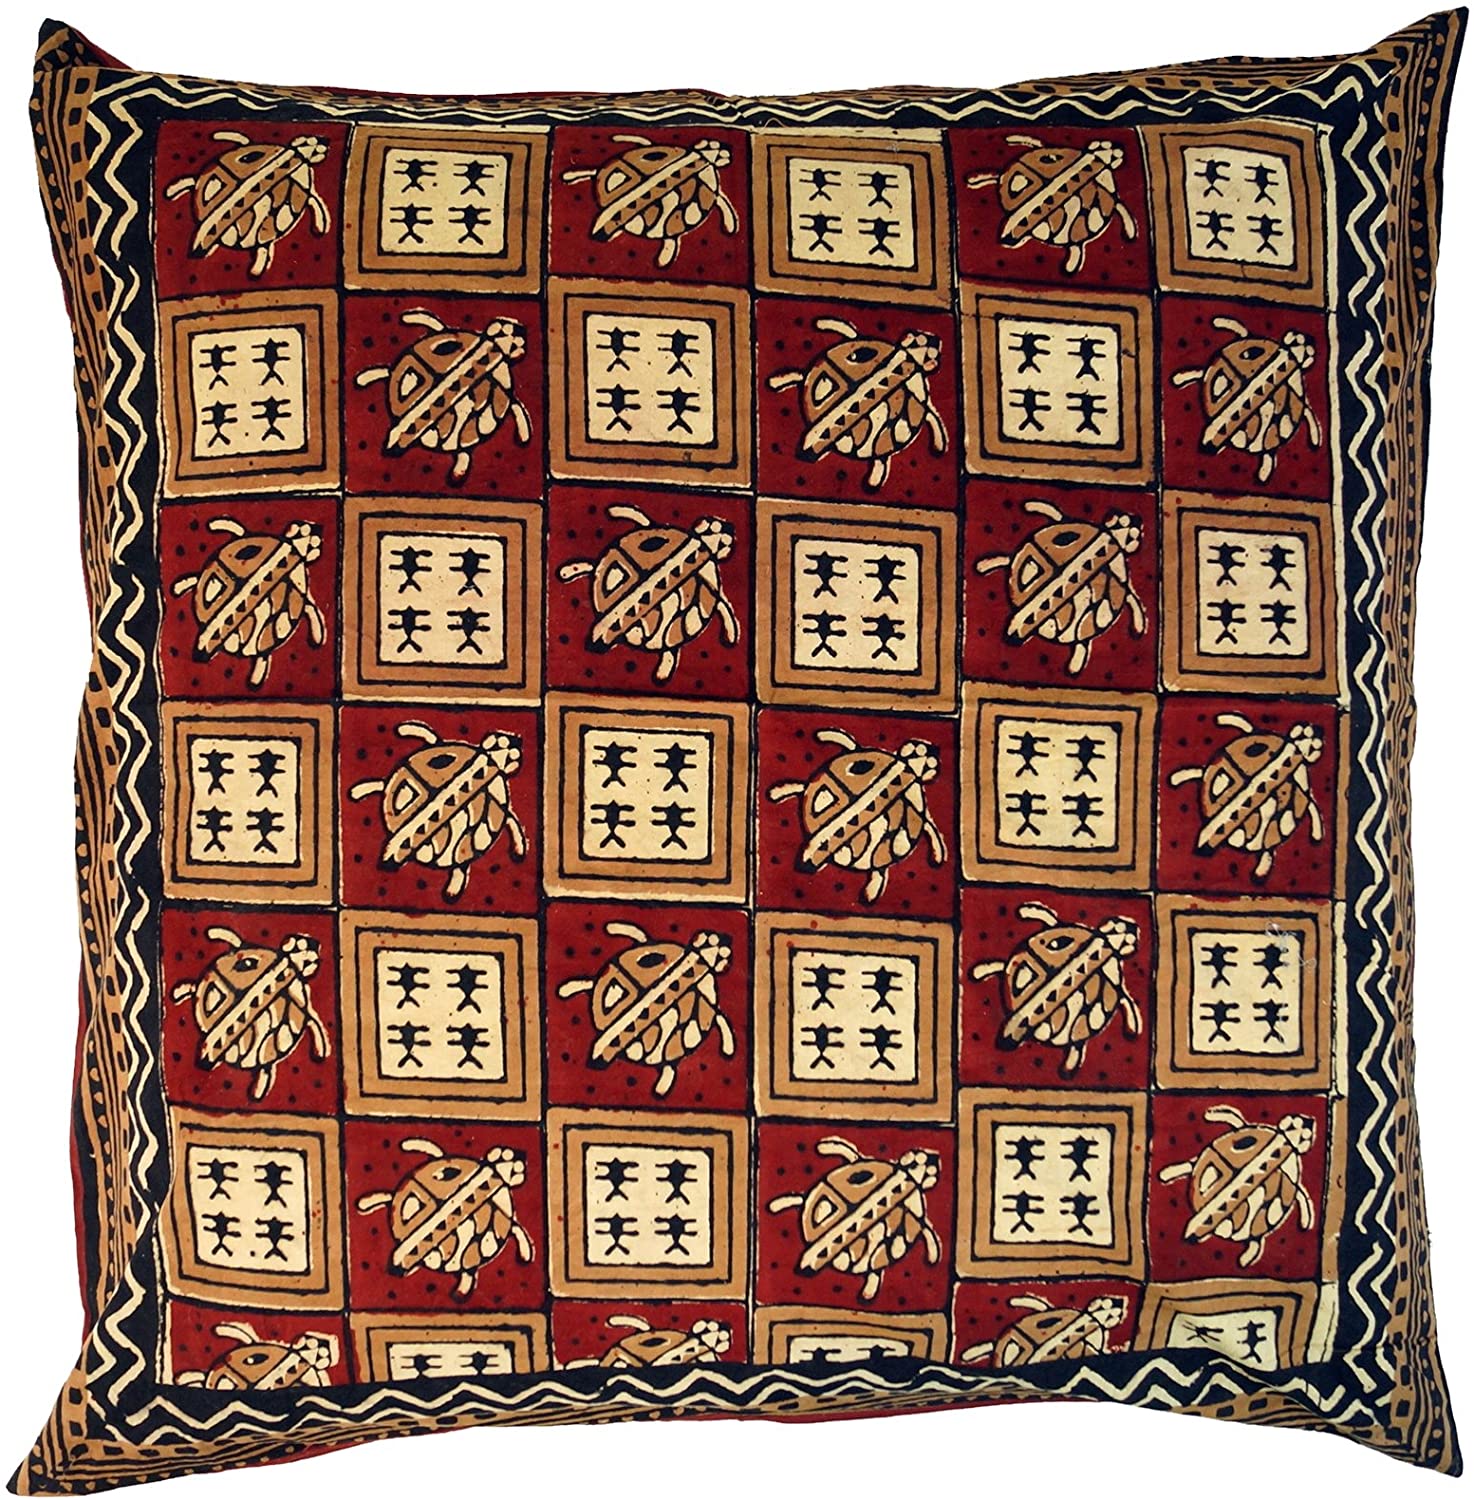 Guru-Shop GURU SHOP XL cushion cover, block print, cushion cover, ethnic, decorative cushion cover with traditional design, pattern 14, red, cotton, 80 x 80 x 0.2 cm, decorative cushion, sofa cushion